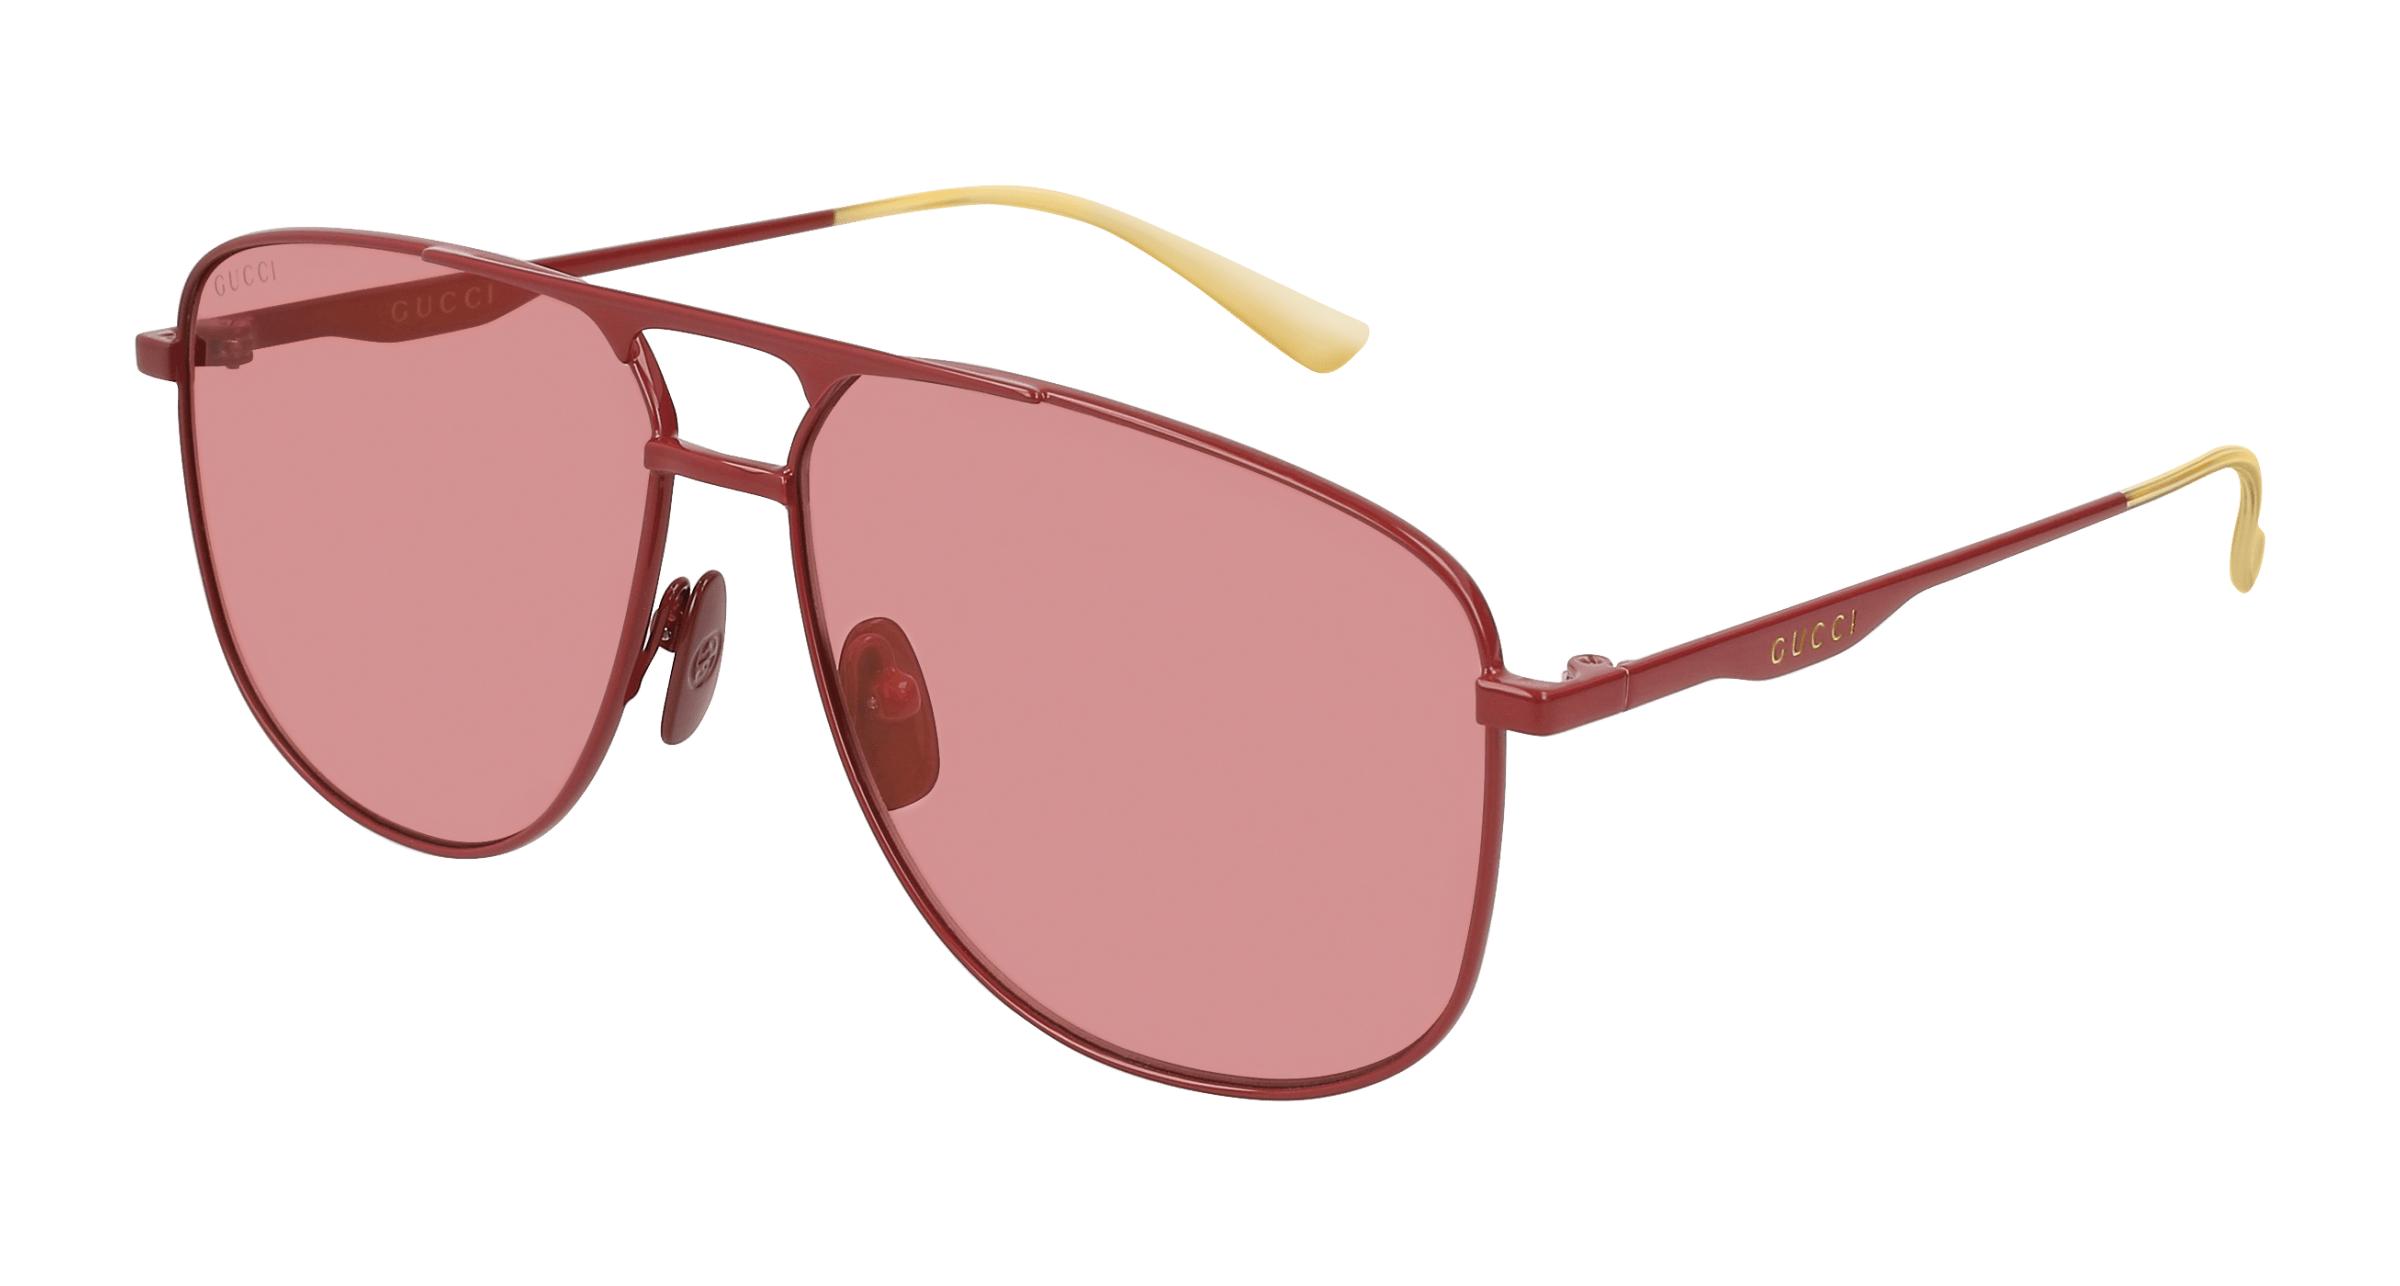 Gucci | Accessories | Gucci Aviator Metal Sunglasses Red Green And Gold |  Poshmark